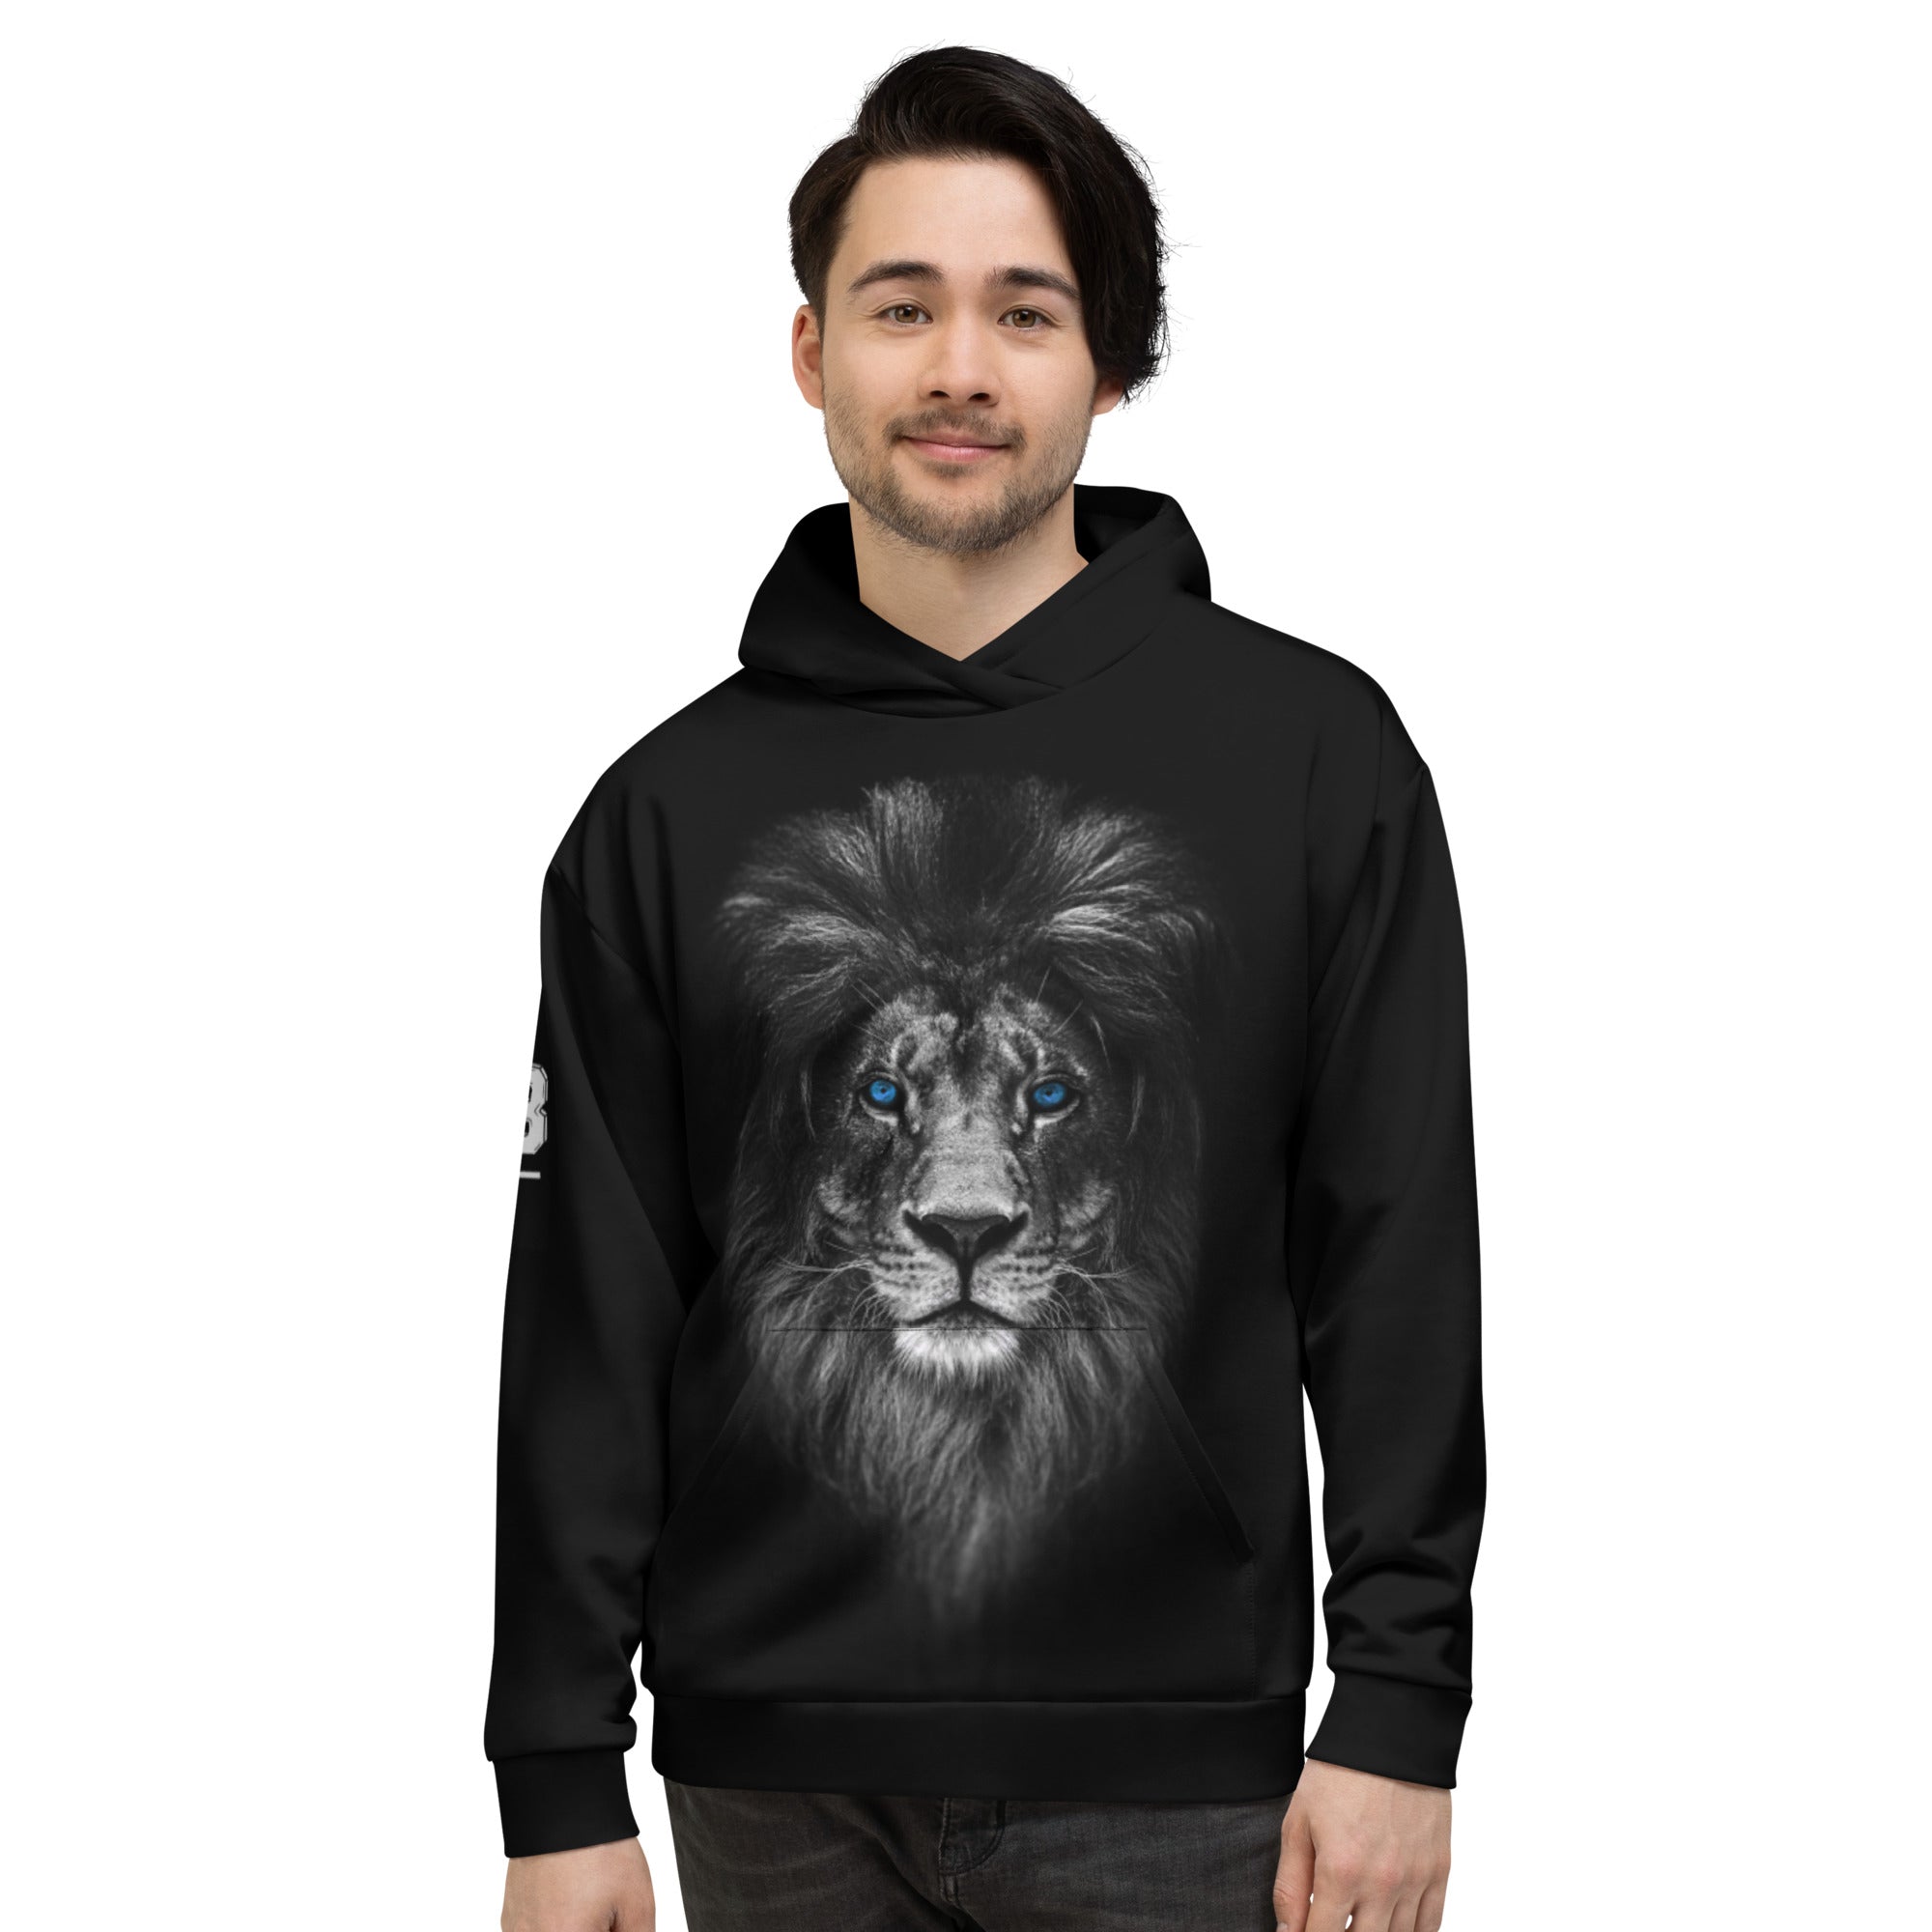 Shop Detroit Lions Sweatshirts s & More andise - Sweats & hoodies